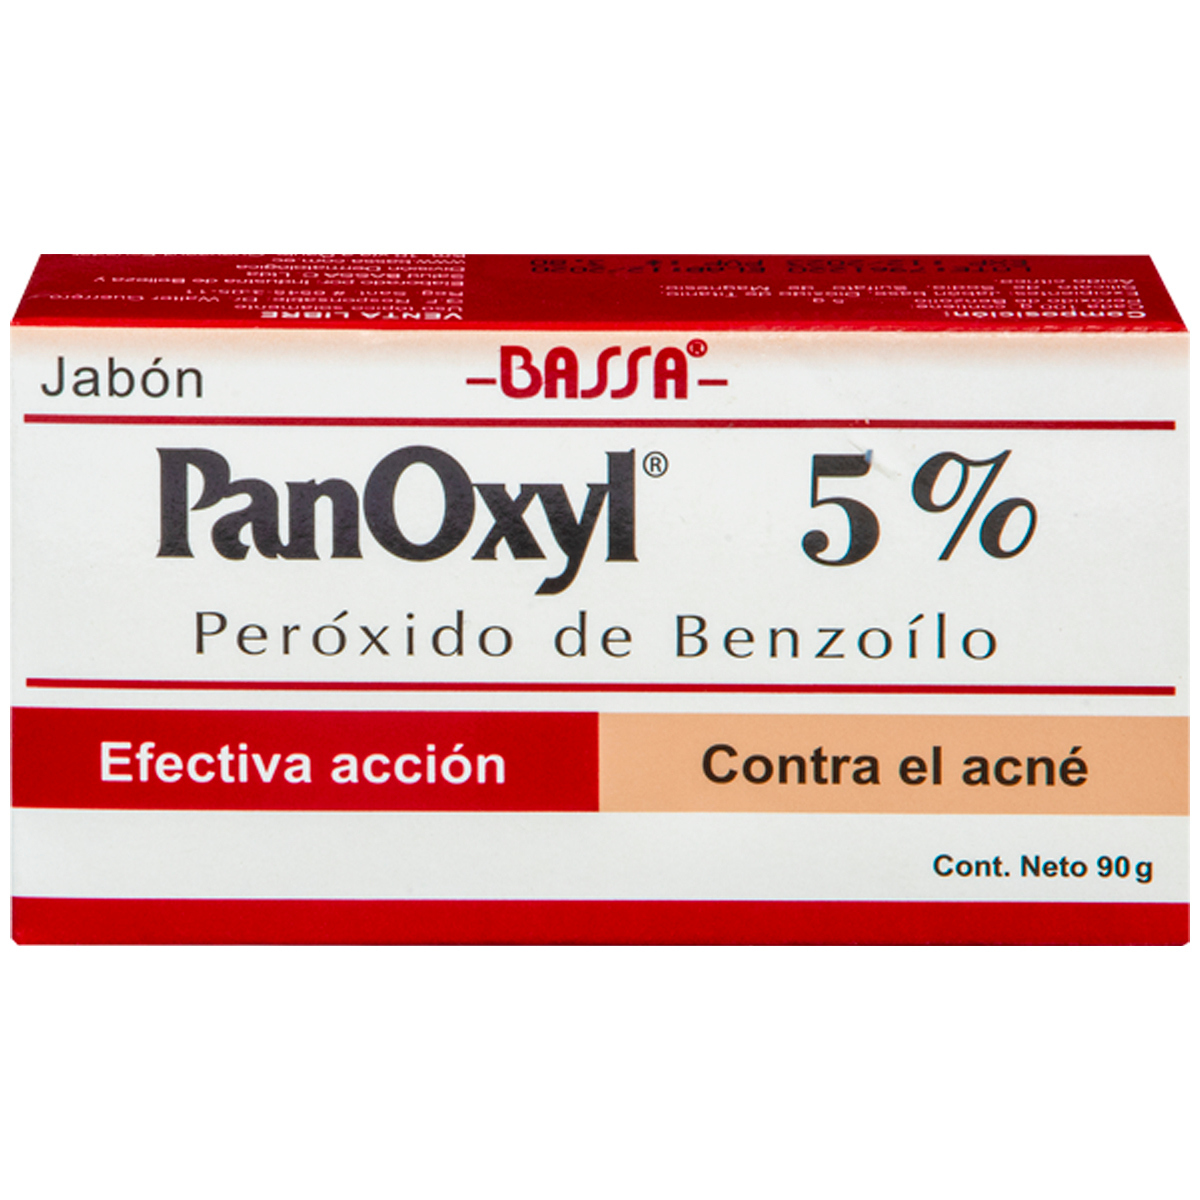 Poner fluctuar Impresionismo Jabón PanOxyl Bassa Contra el Acné 90g - 922725